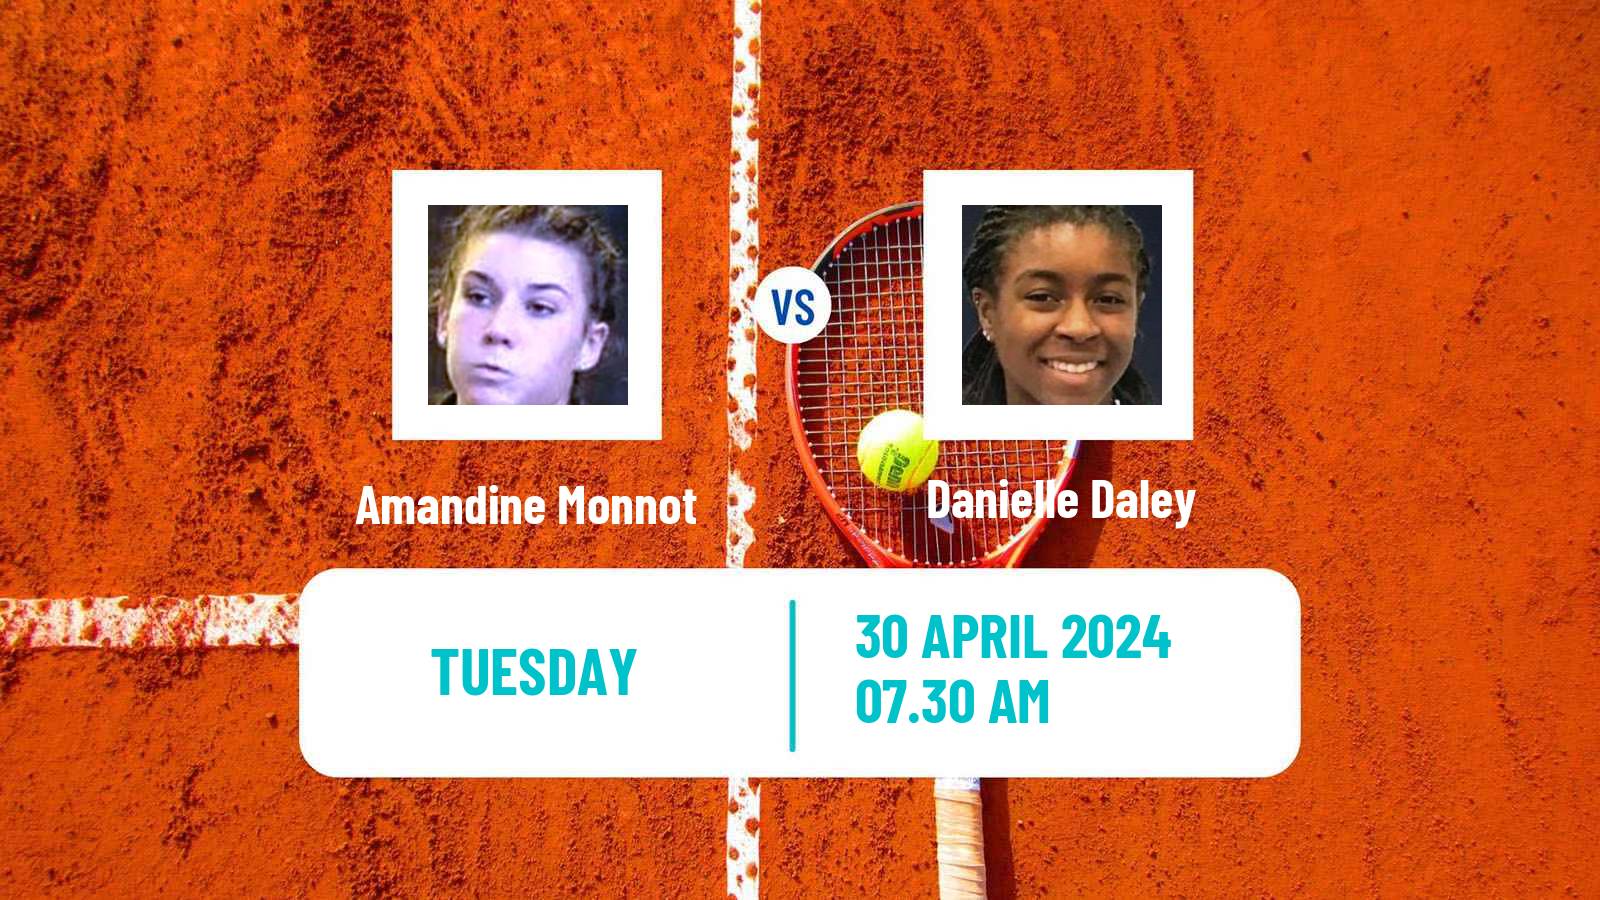 Tennis ITF W35 Nottingham 2 Women Amandine Monnot - Danielle Daley